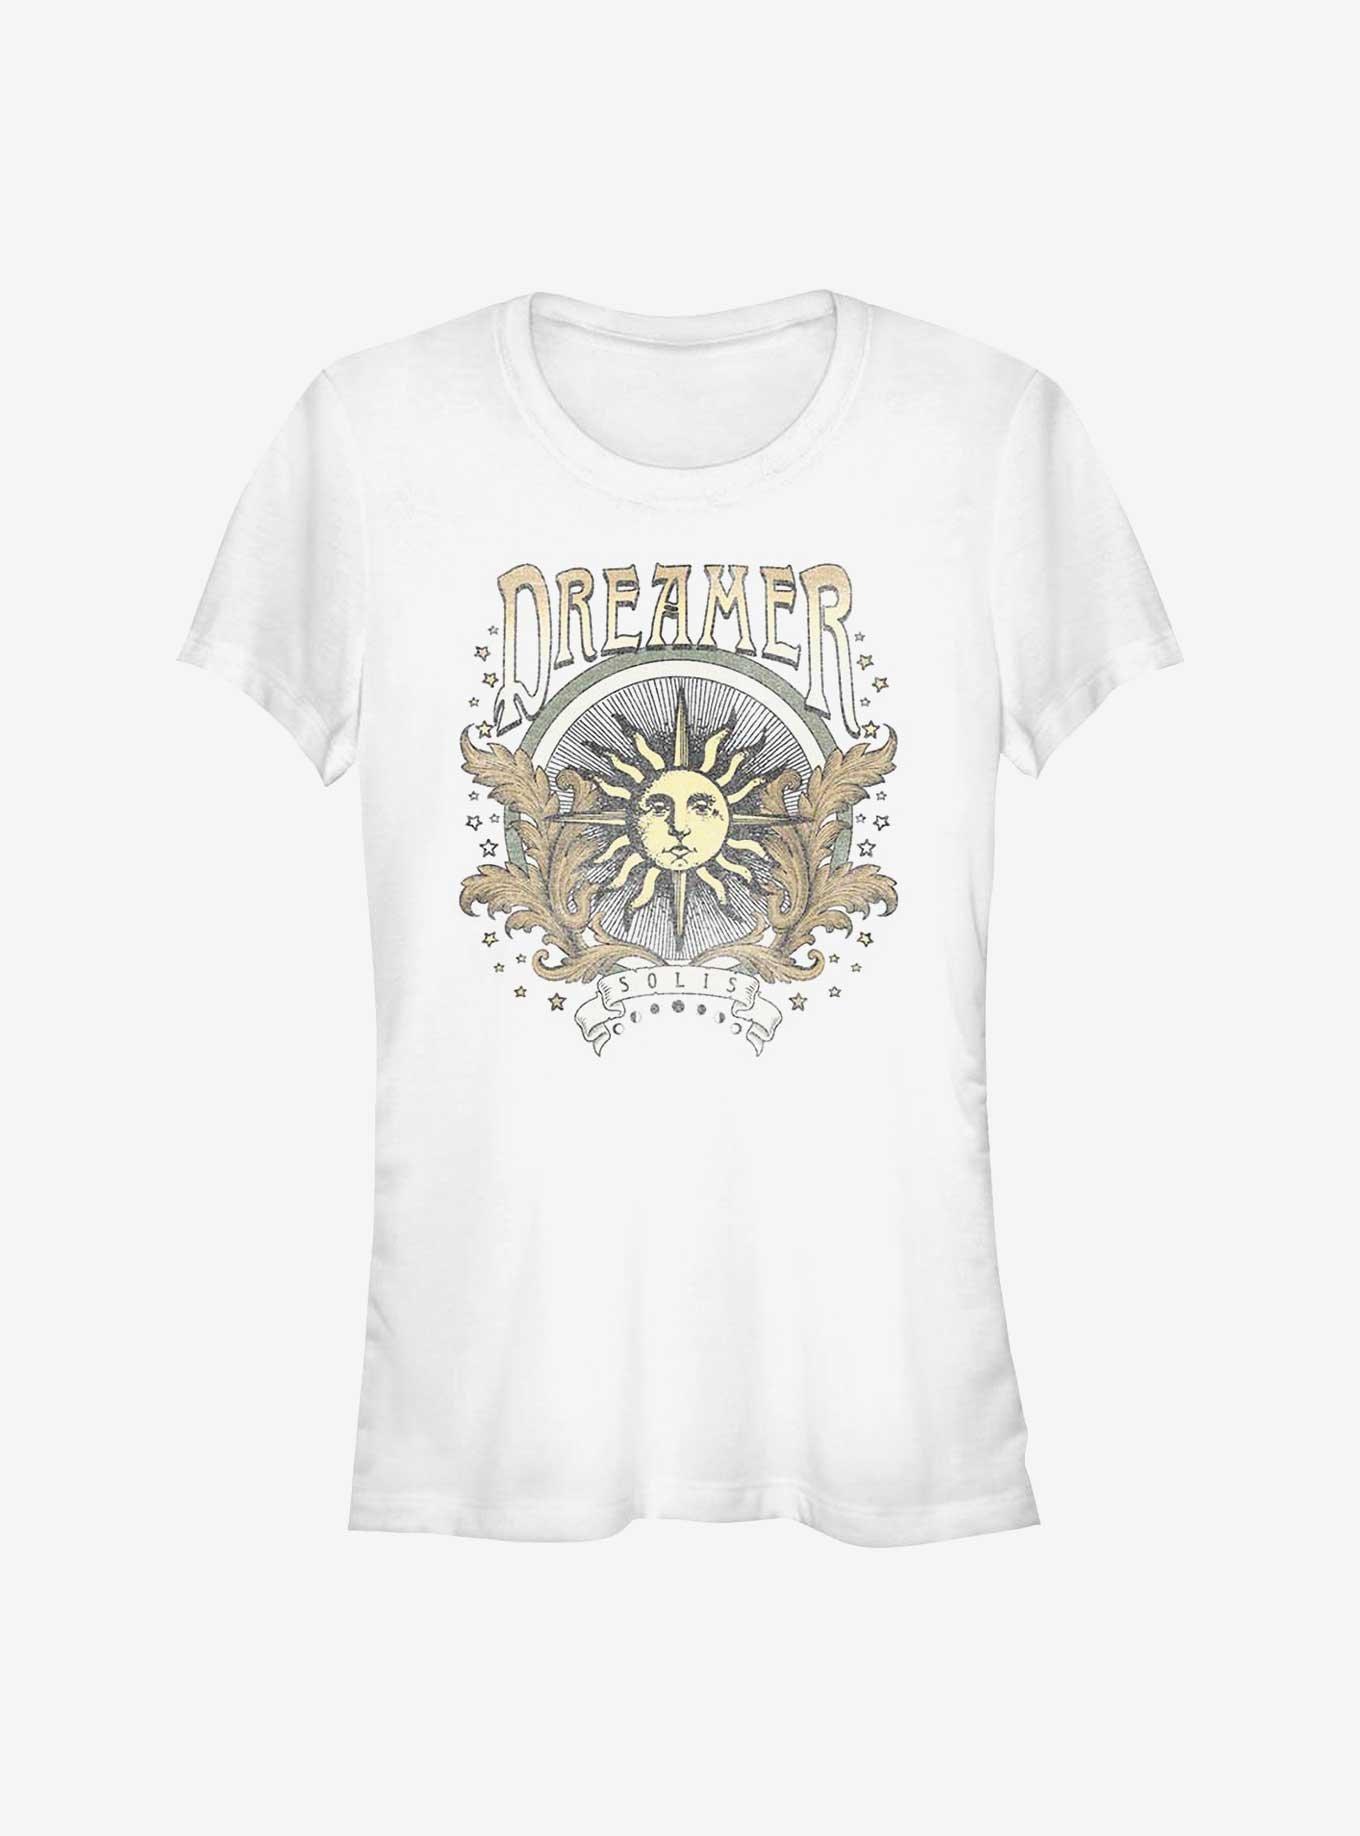 Dreamer Solis Girls T-Shirt, WHITE, hi-res